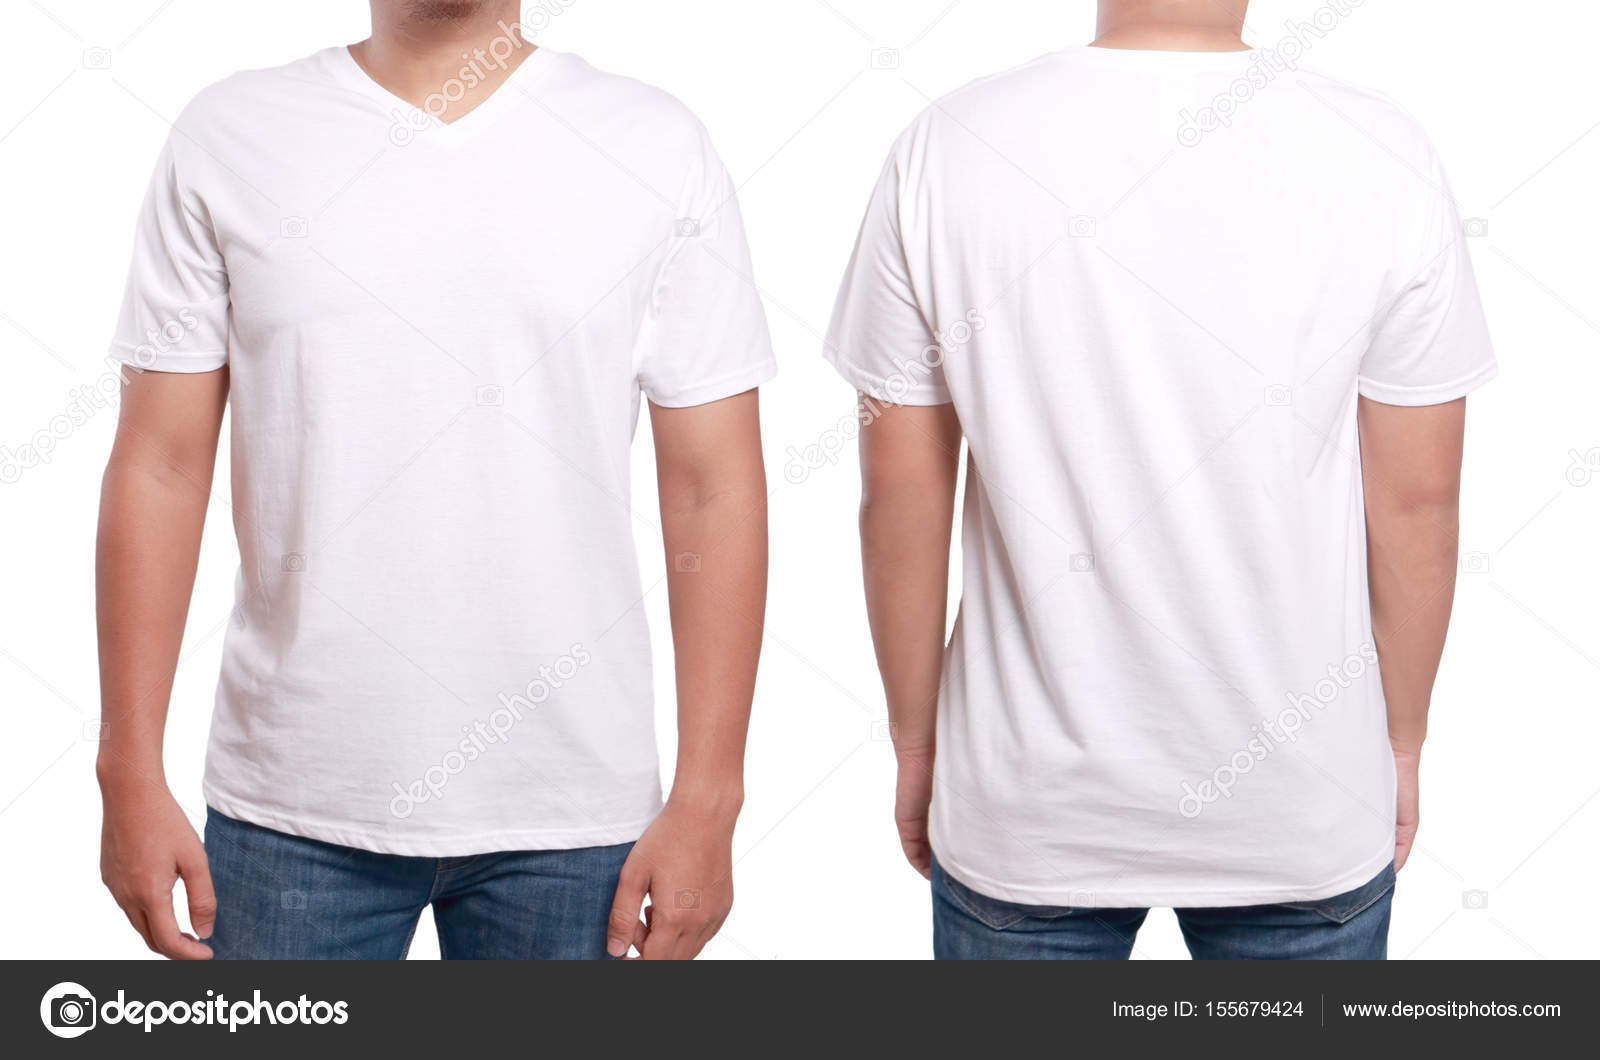 plain white t shirt template